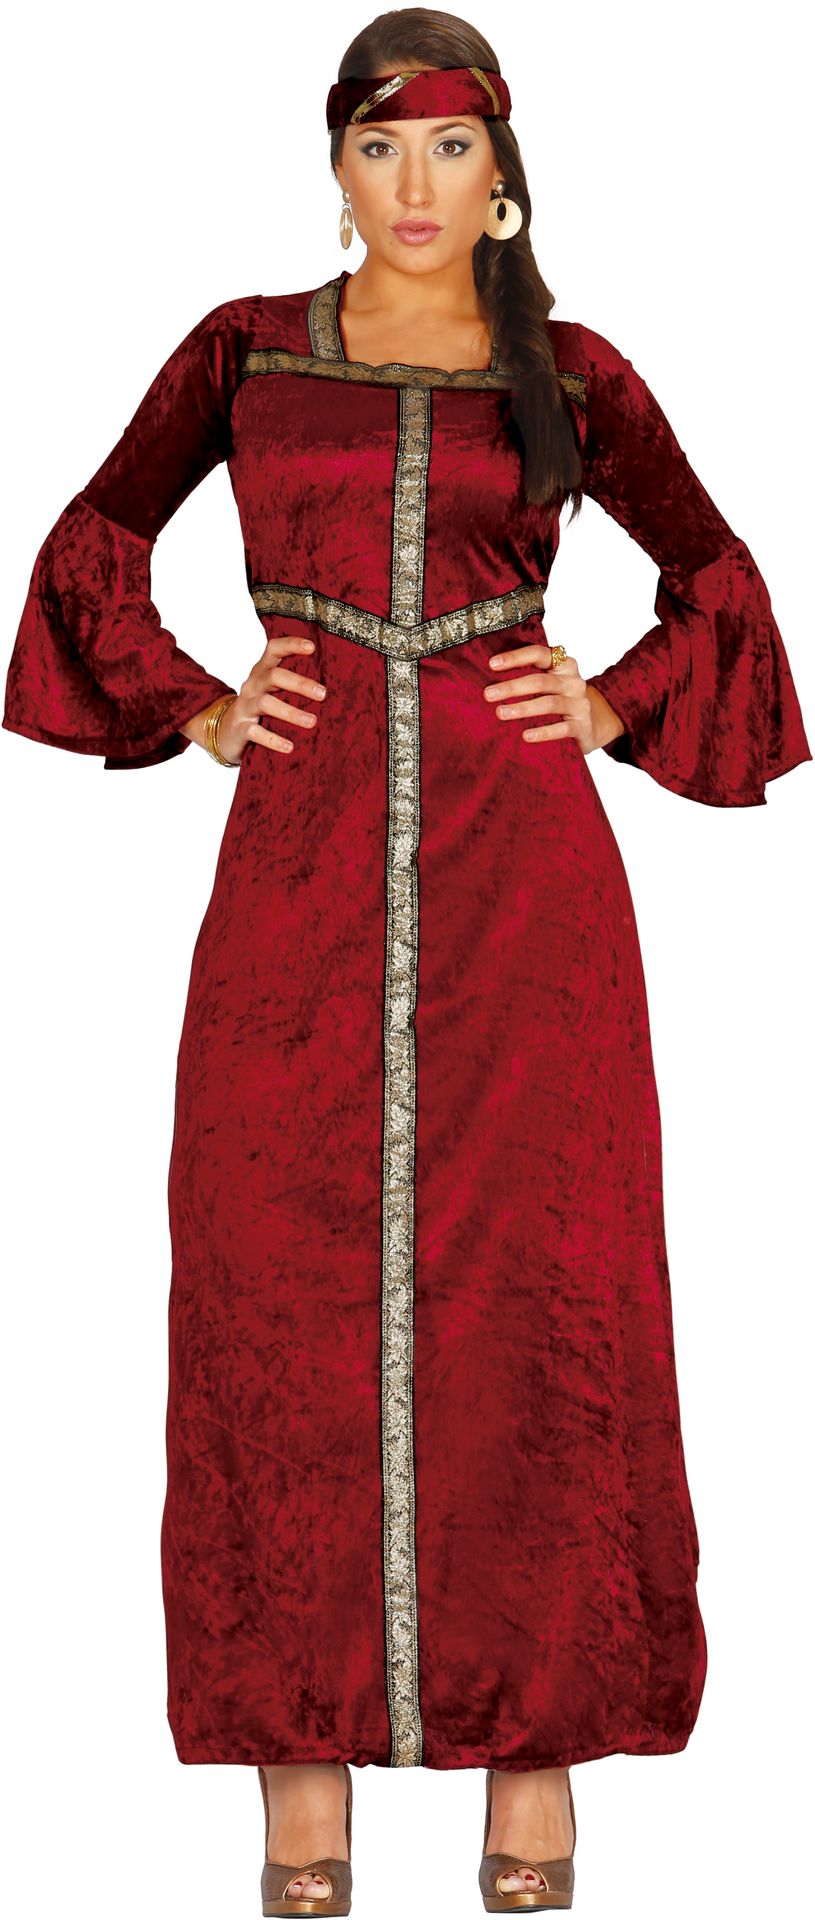 Renaissance jurk rood